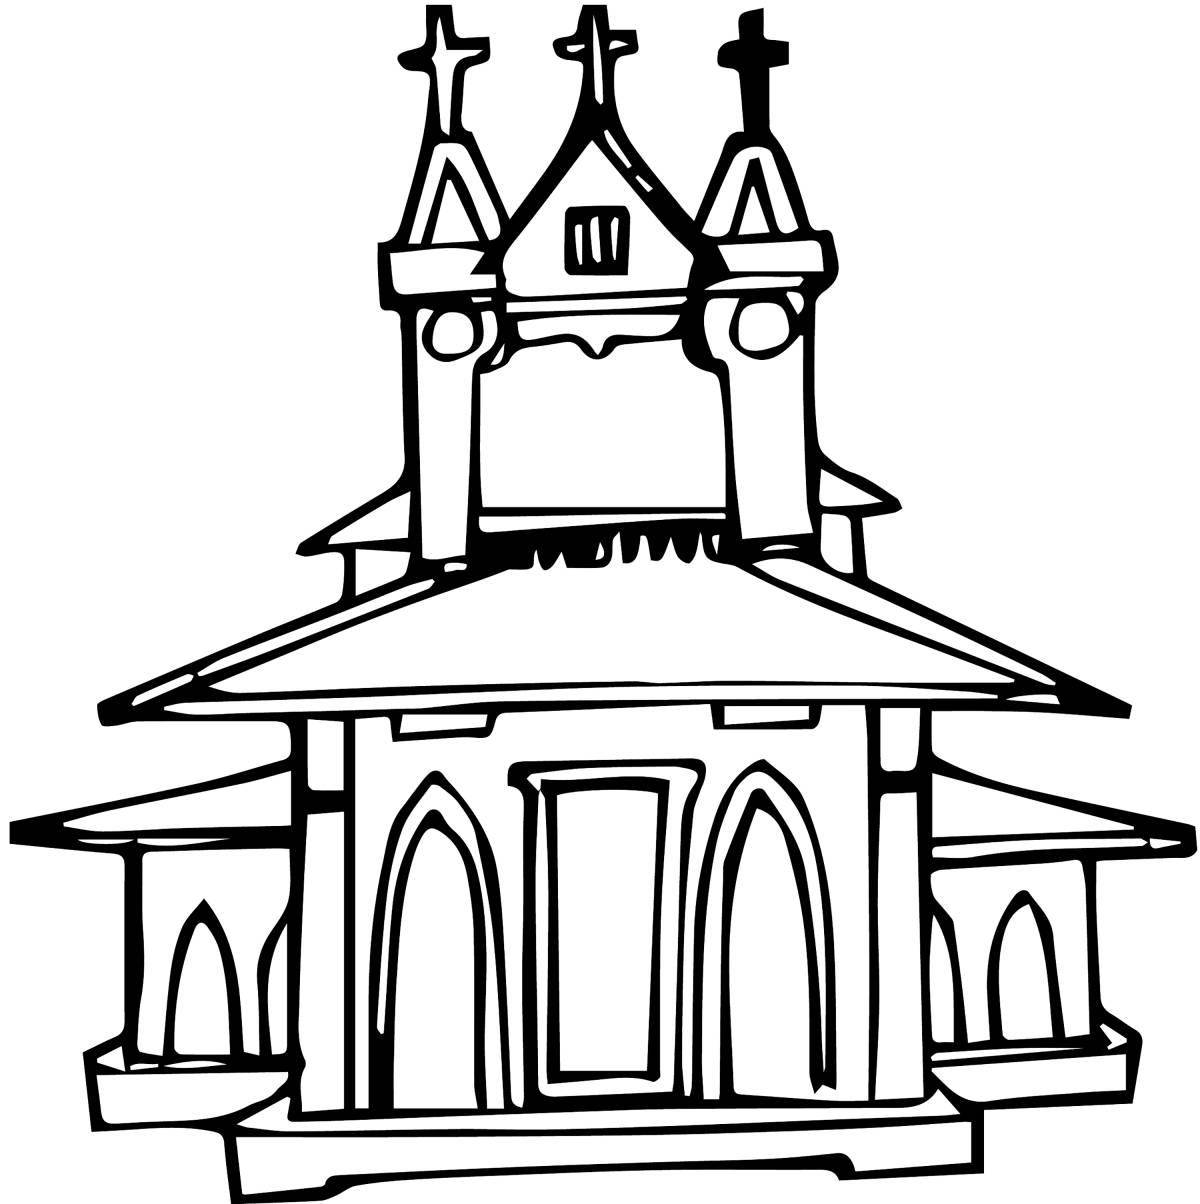 Shining chapel coloring page